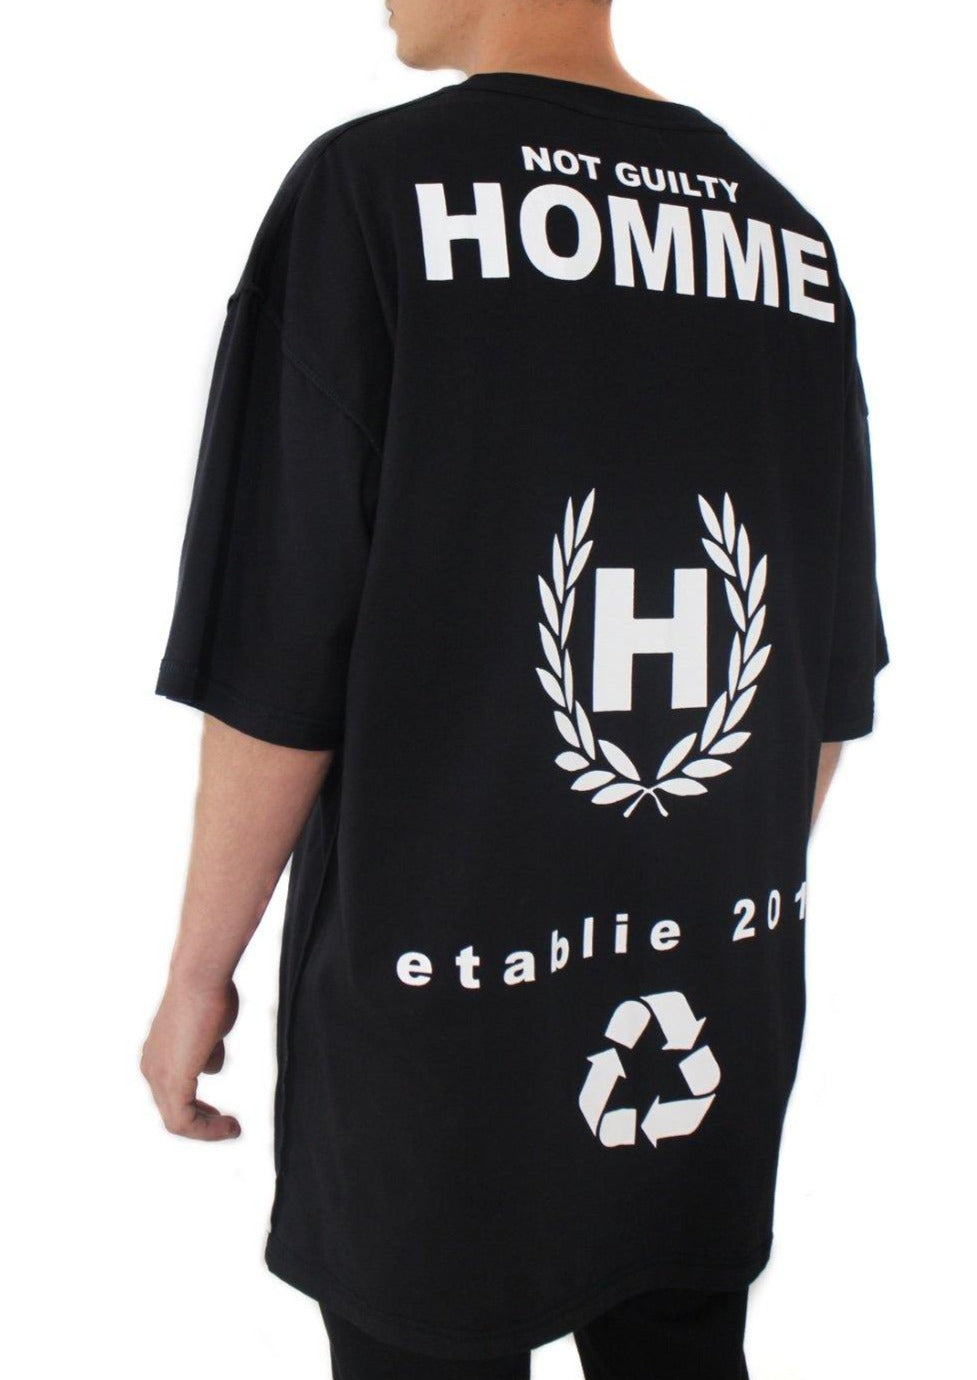 Laurel h T-shirt - Hommeplus